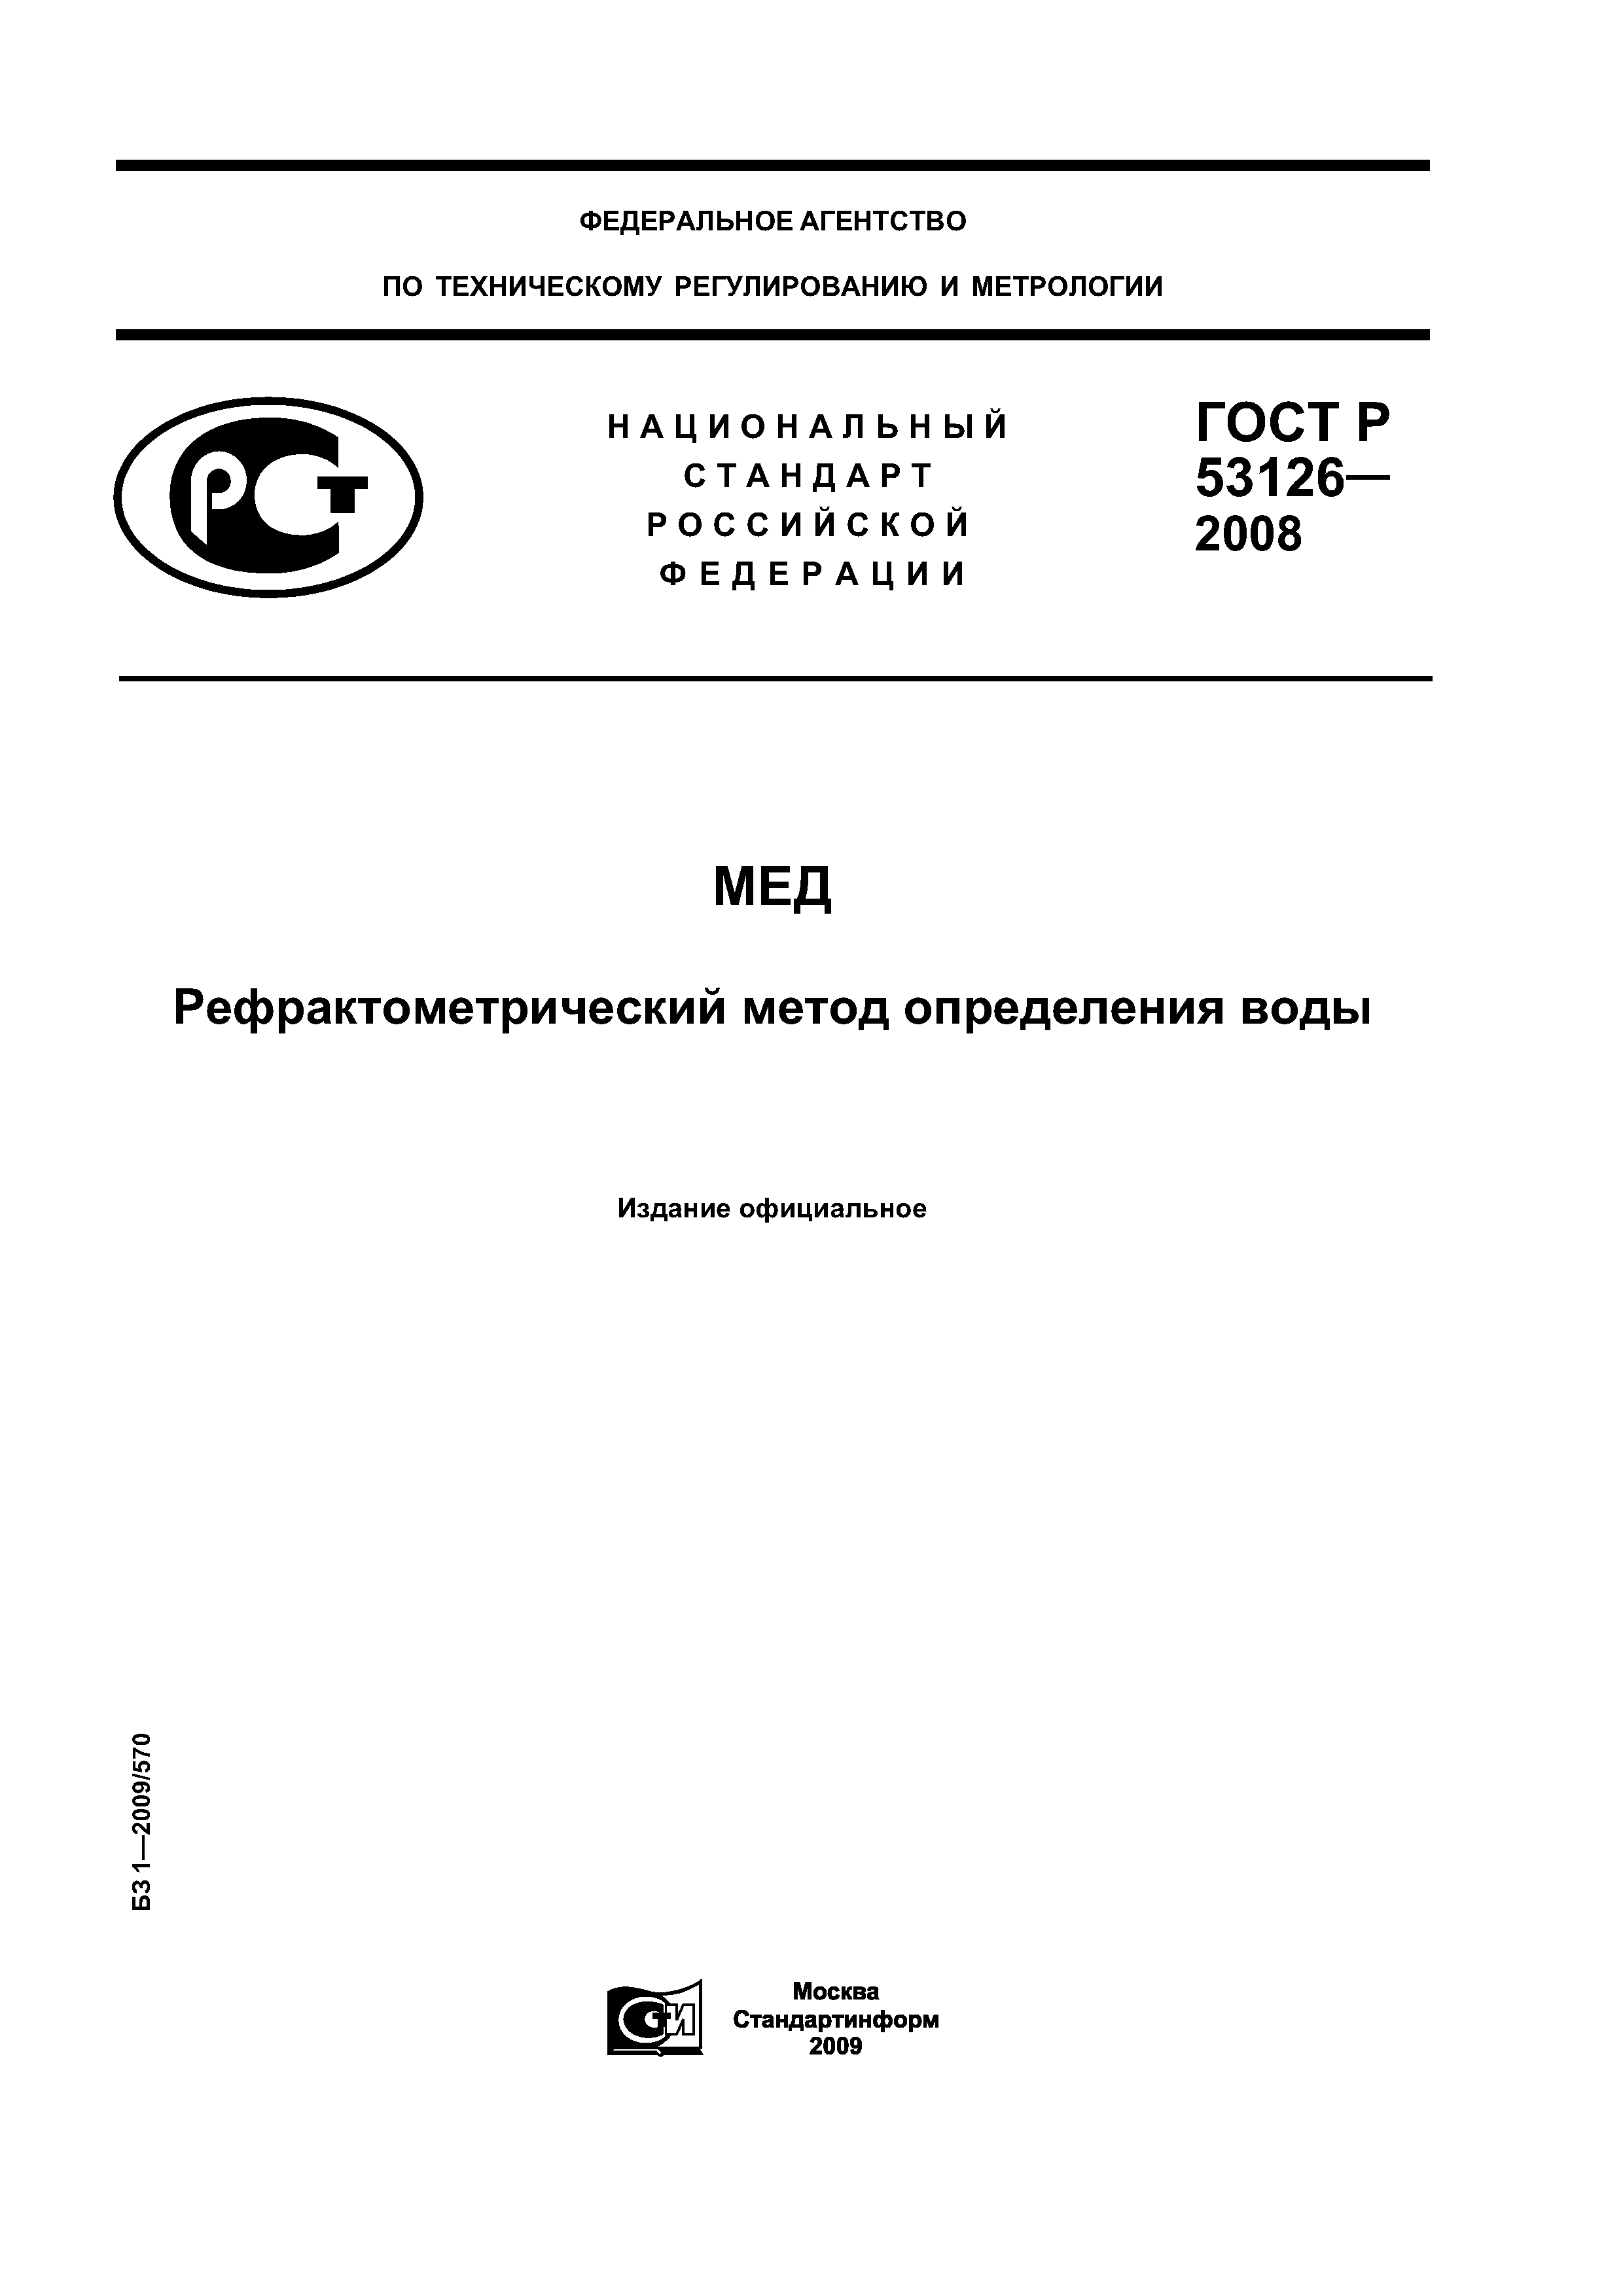 ГОСТ Р 53126-2008